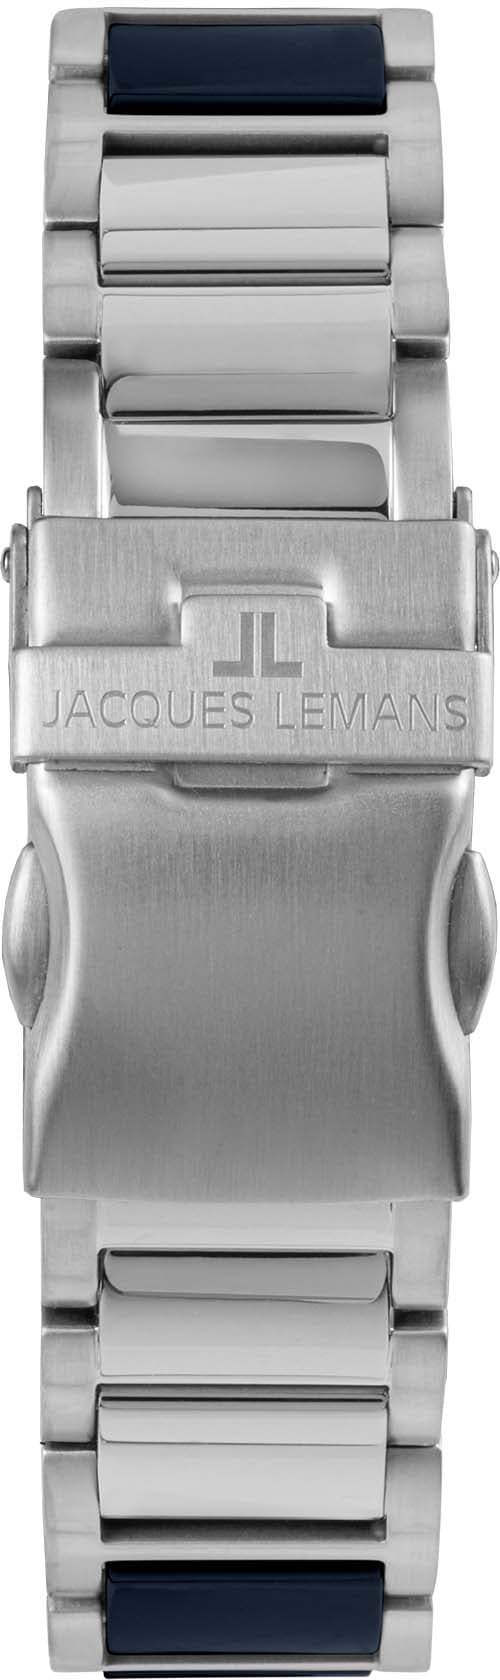 Jacques Lemans Keramikuhr »Liverpool, 42-10B«